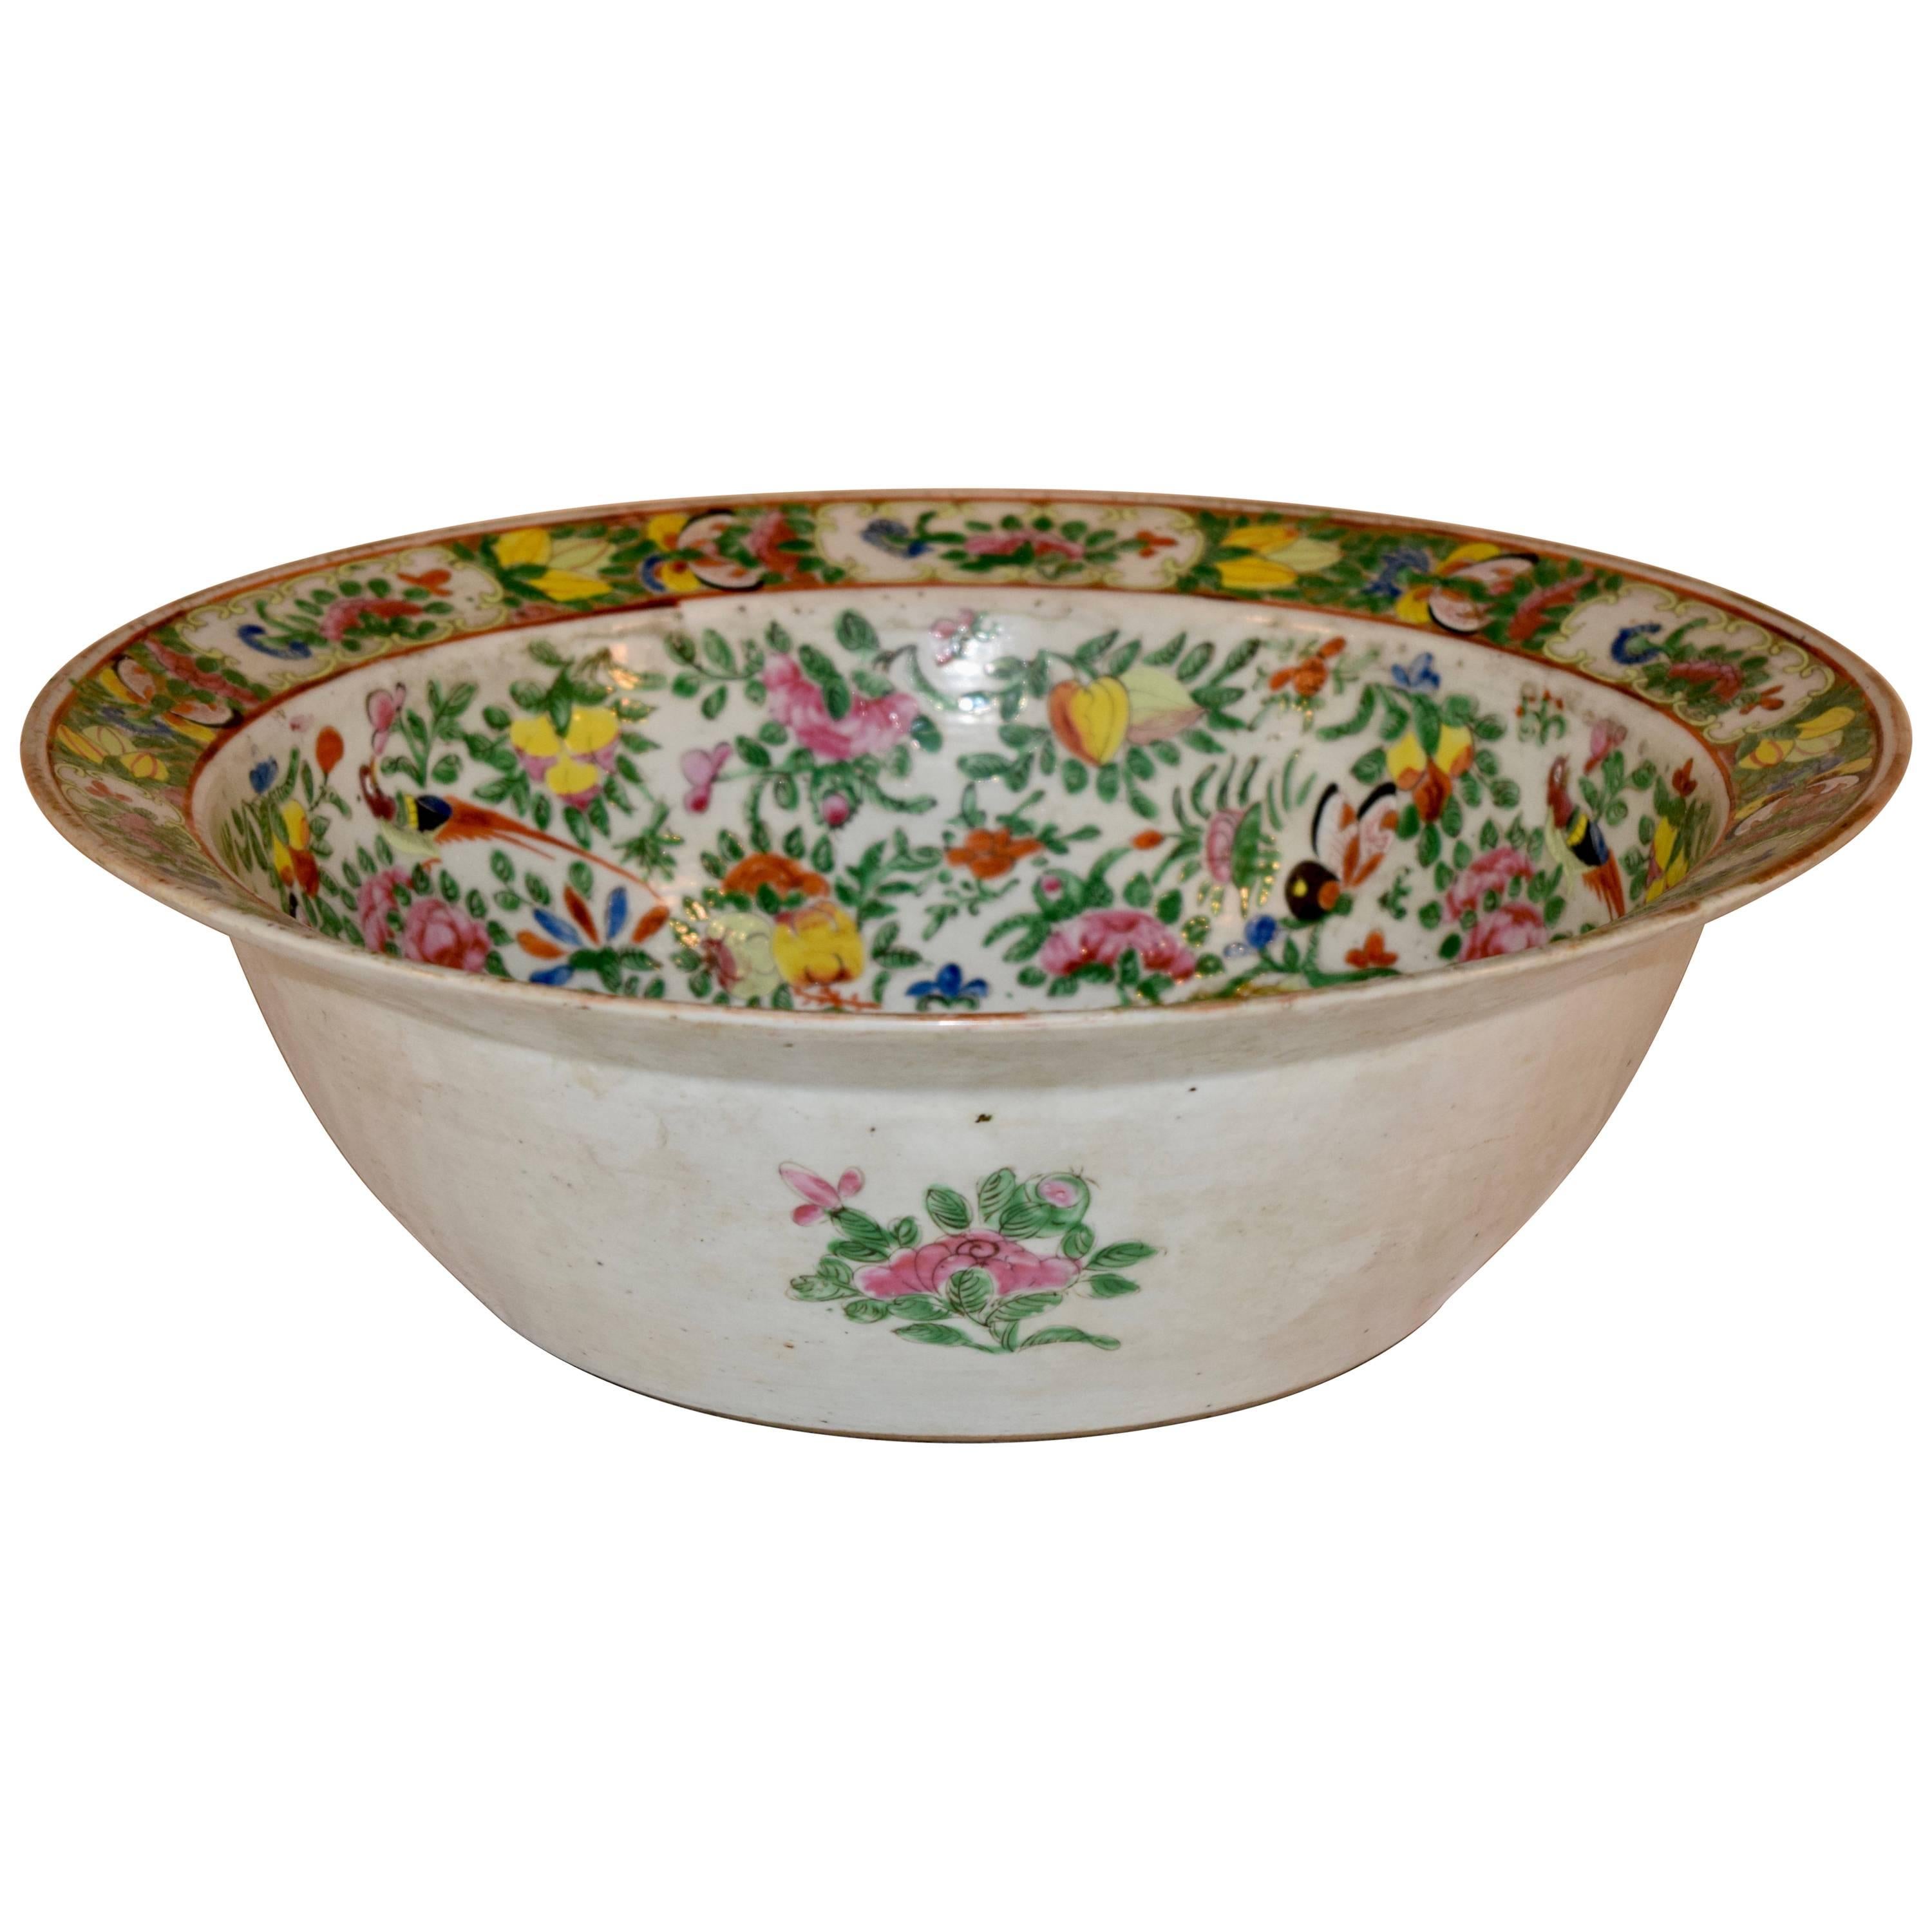 19th Century Export Bowl